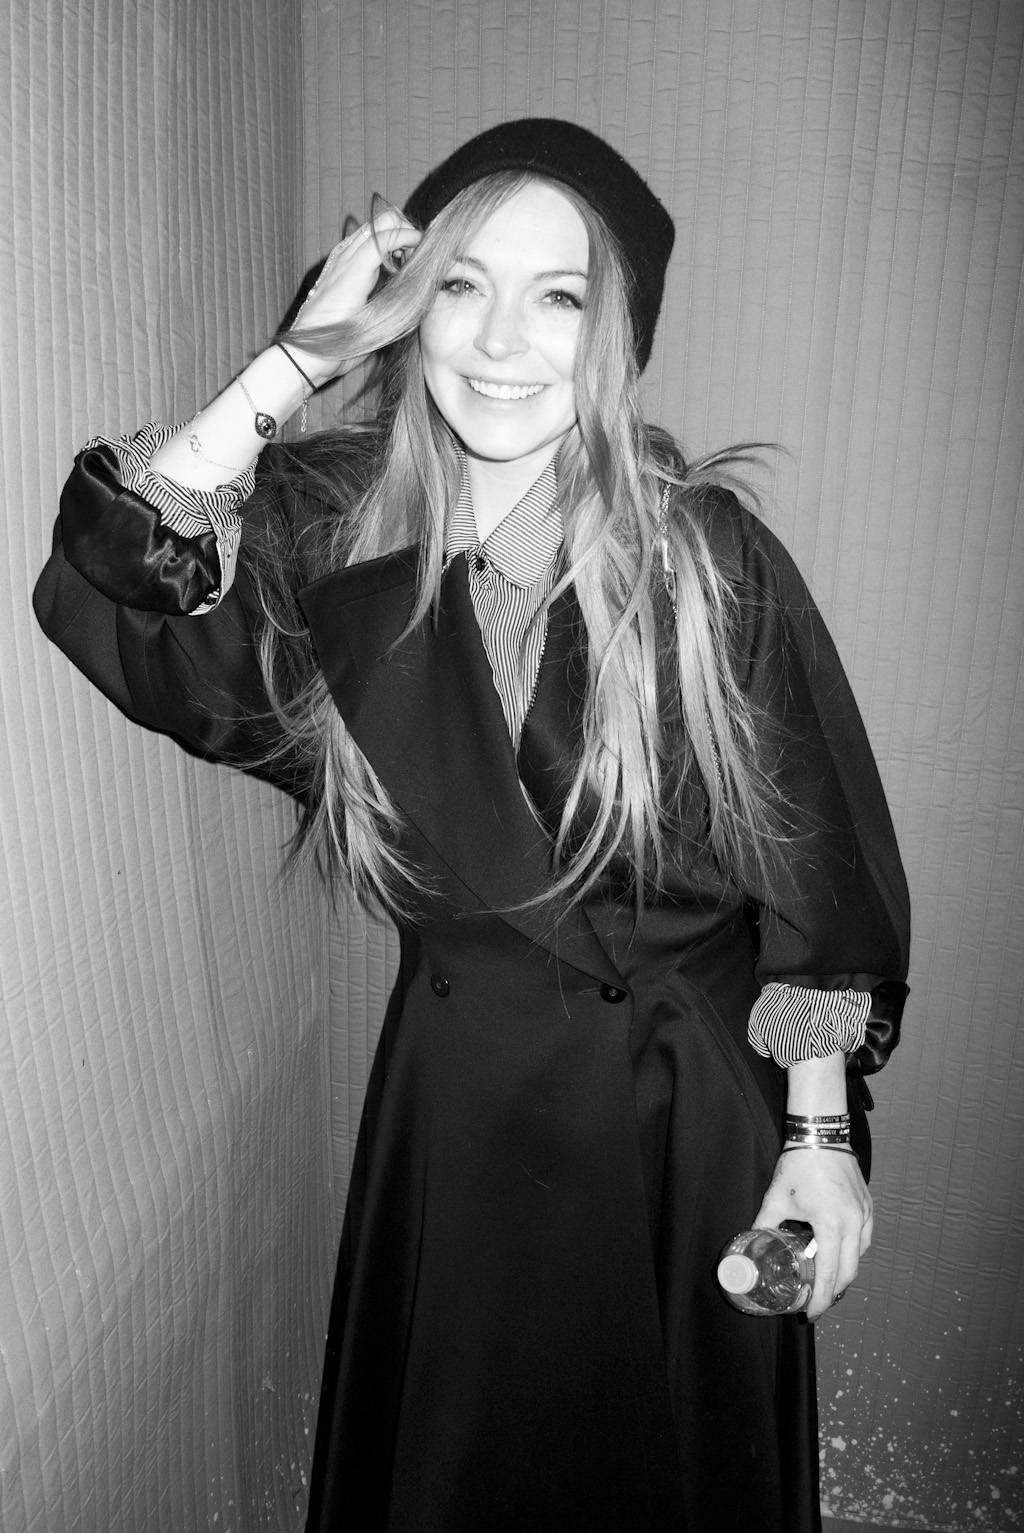 Lindsay Lohan Photo (Линдсей Лохан Фото) голливудская актриса, певица / Страница - 9